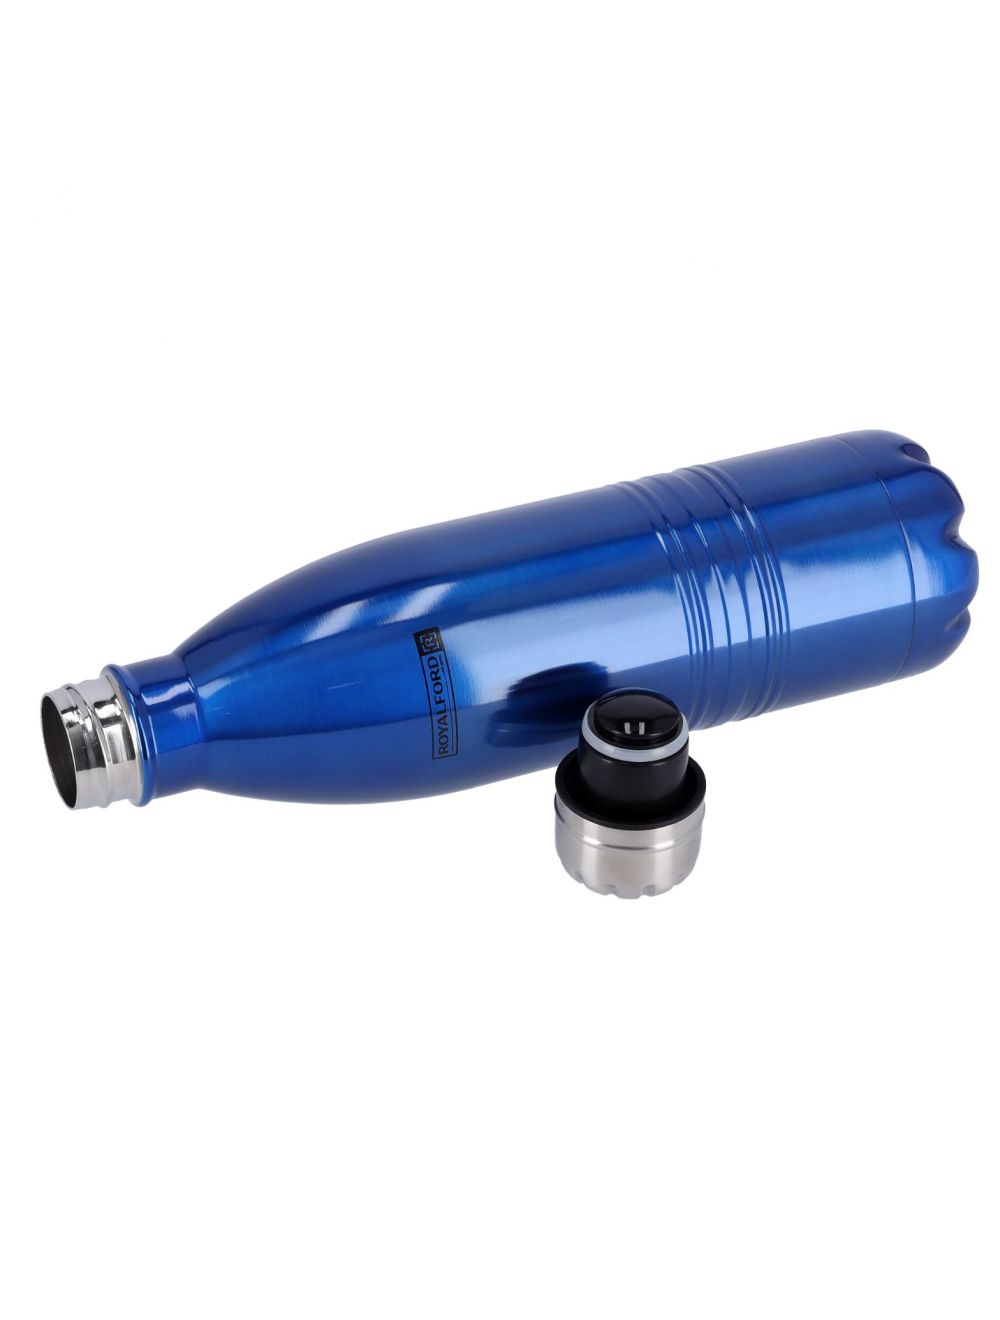 Royalford 750ml Vacuum Bottle Blue & Silver